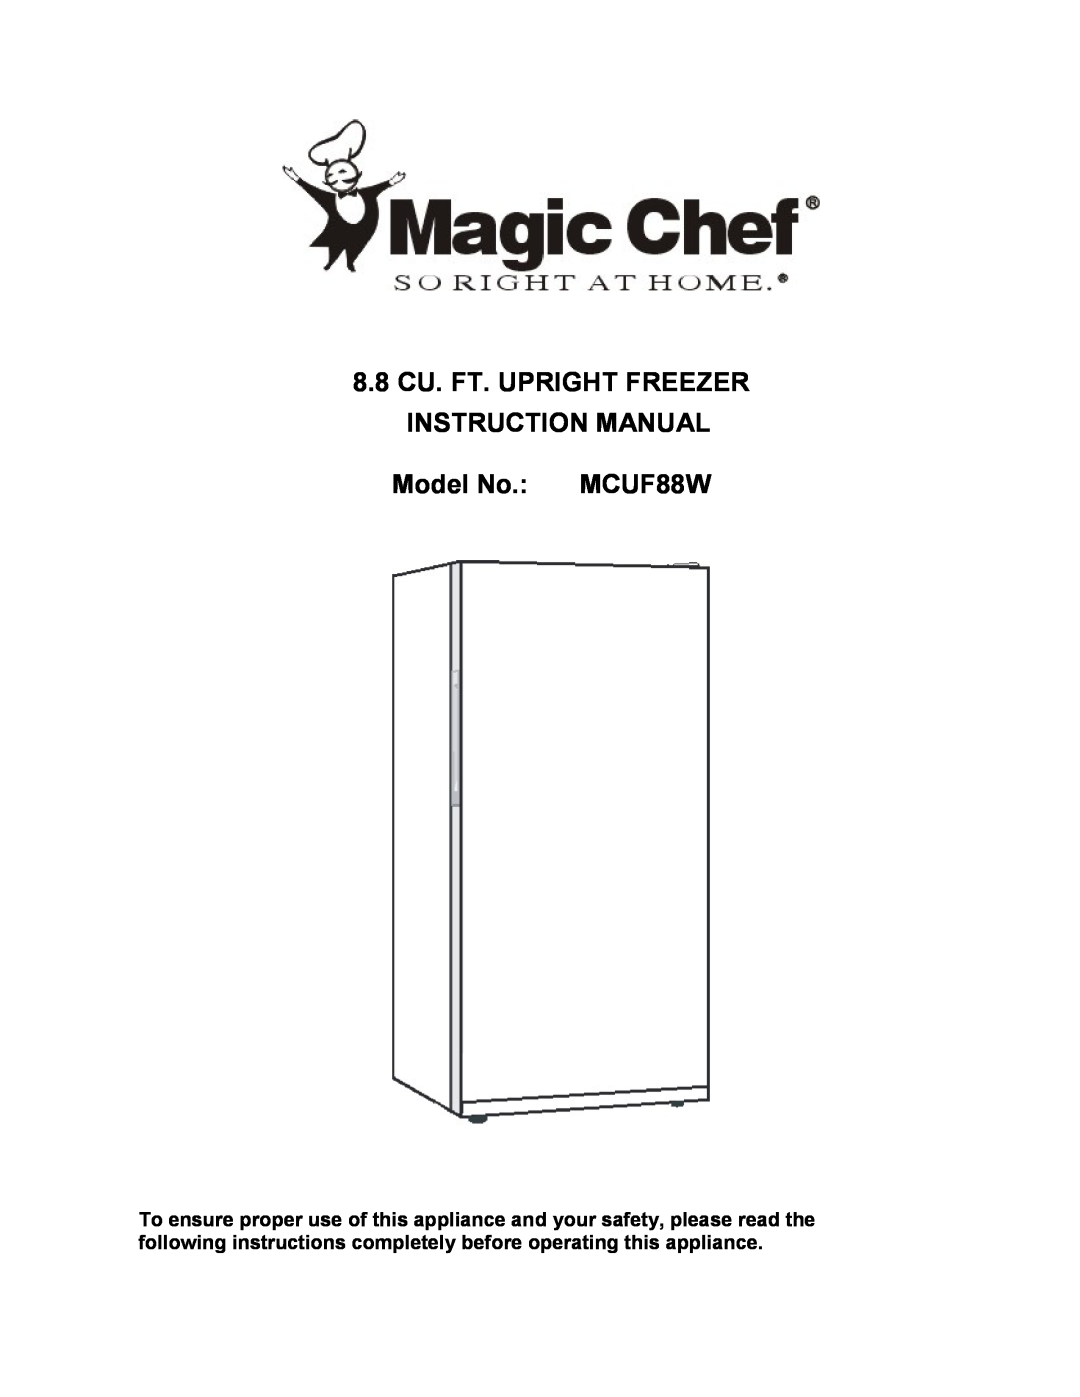 Magic Chef instruction manual Model No. MCUF88W 